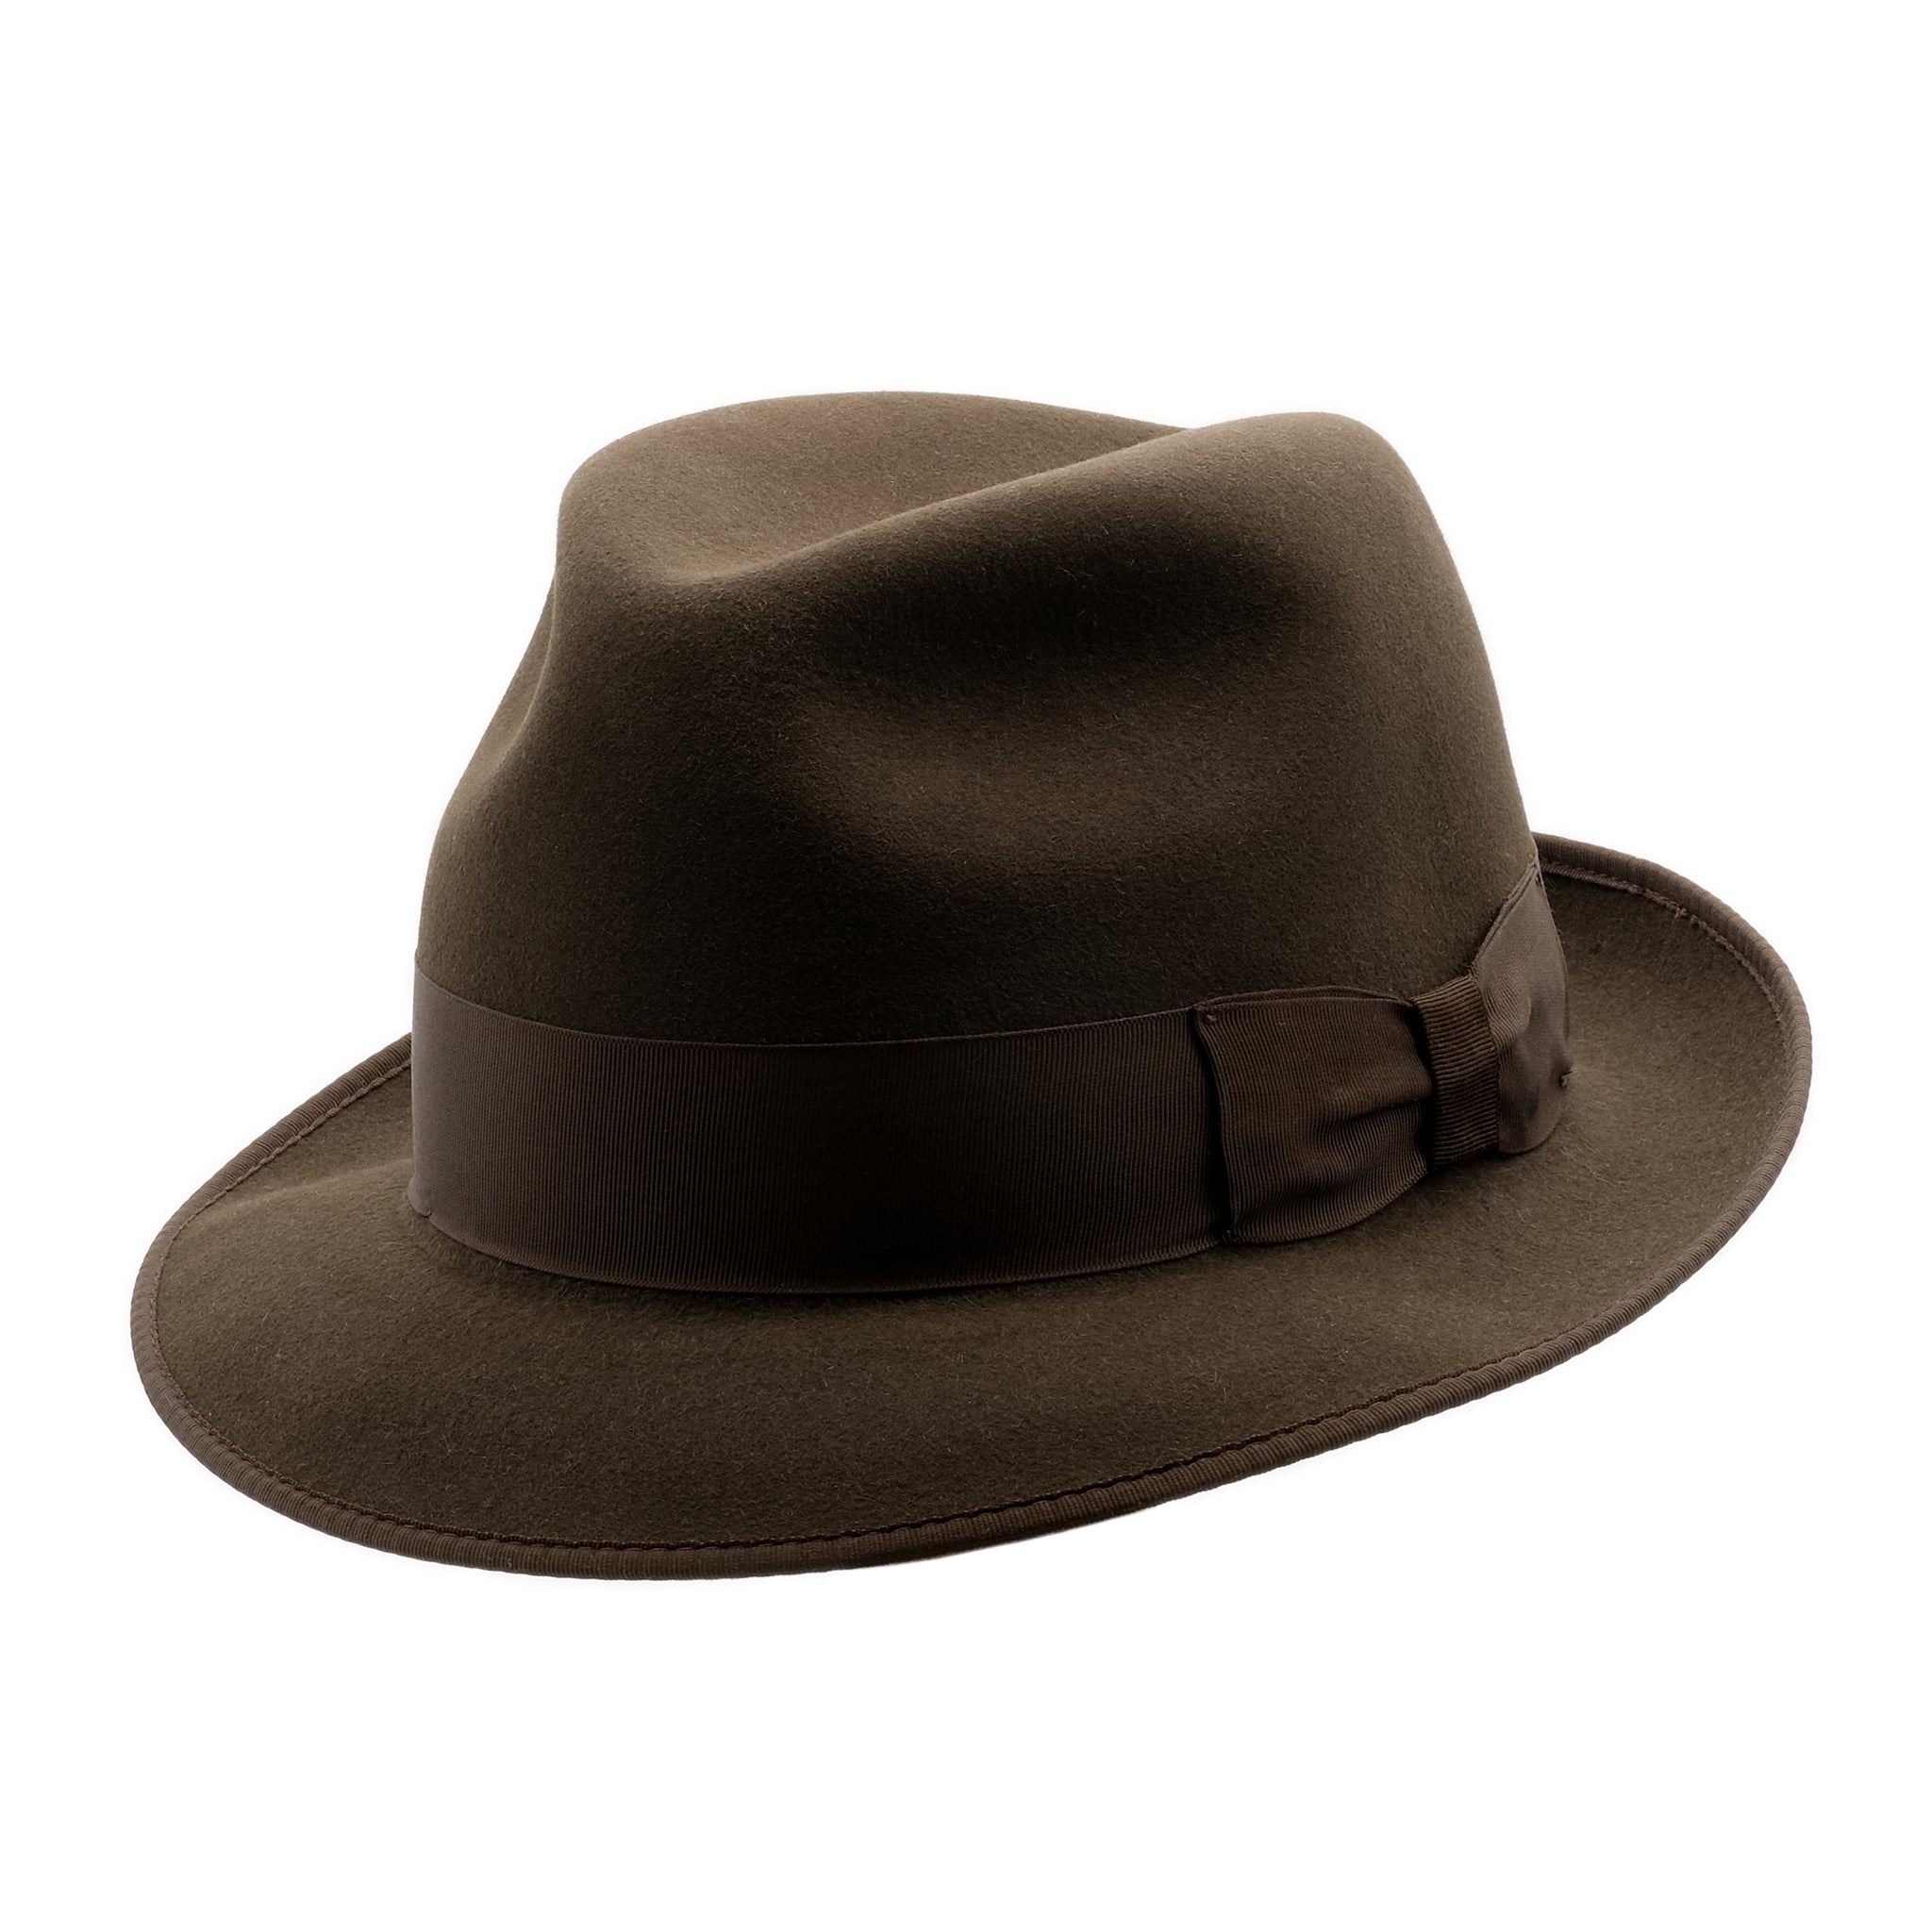 Angle view of Akubra Hampton hat in Cedar Brown colour